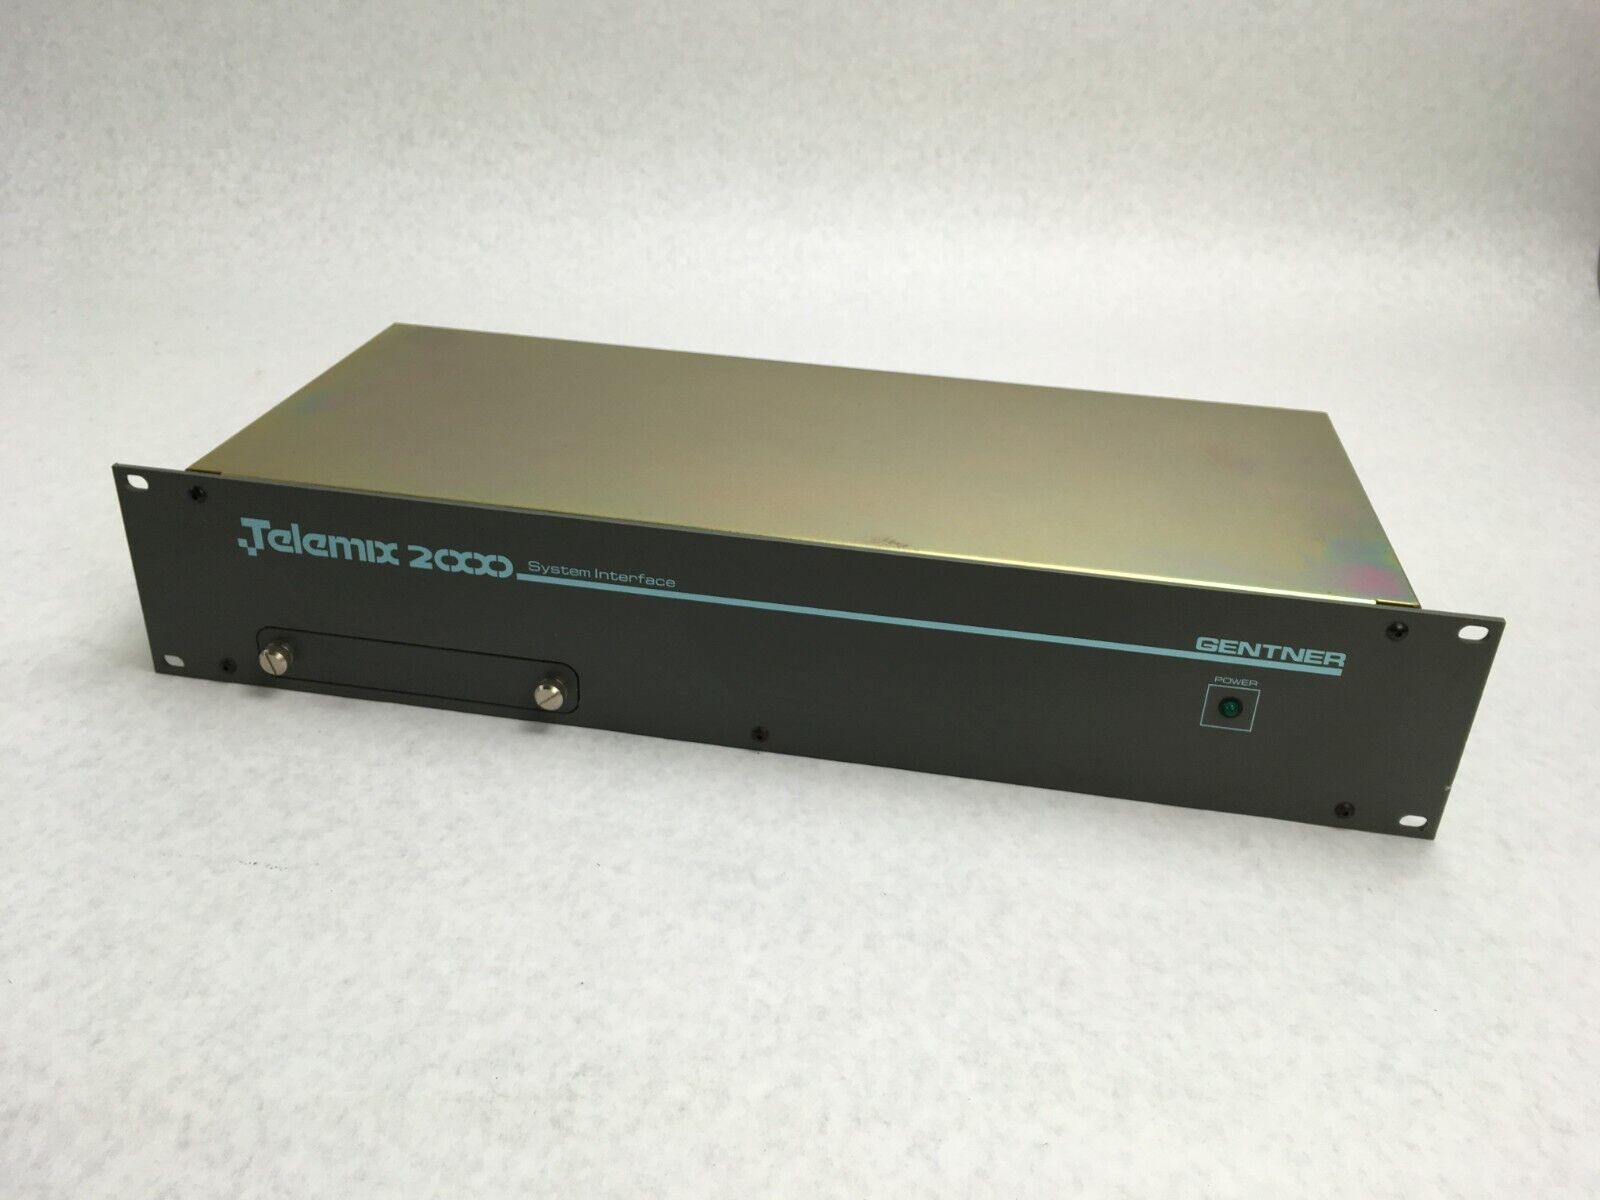 Telemix 2000 System Interface Gentner Call Director